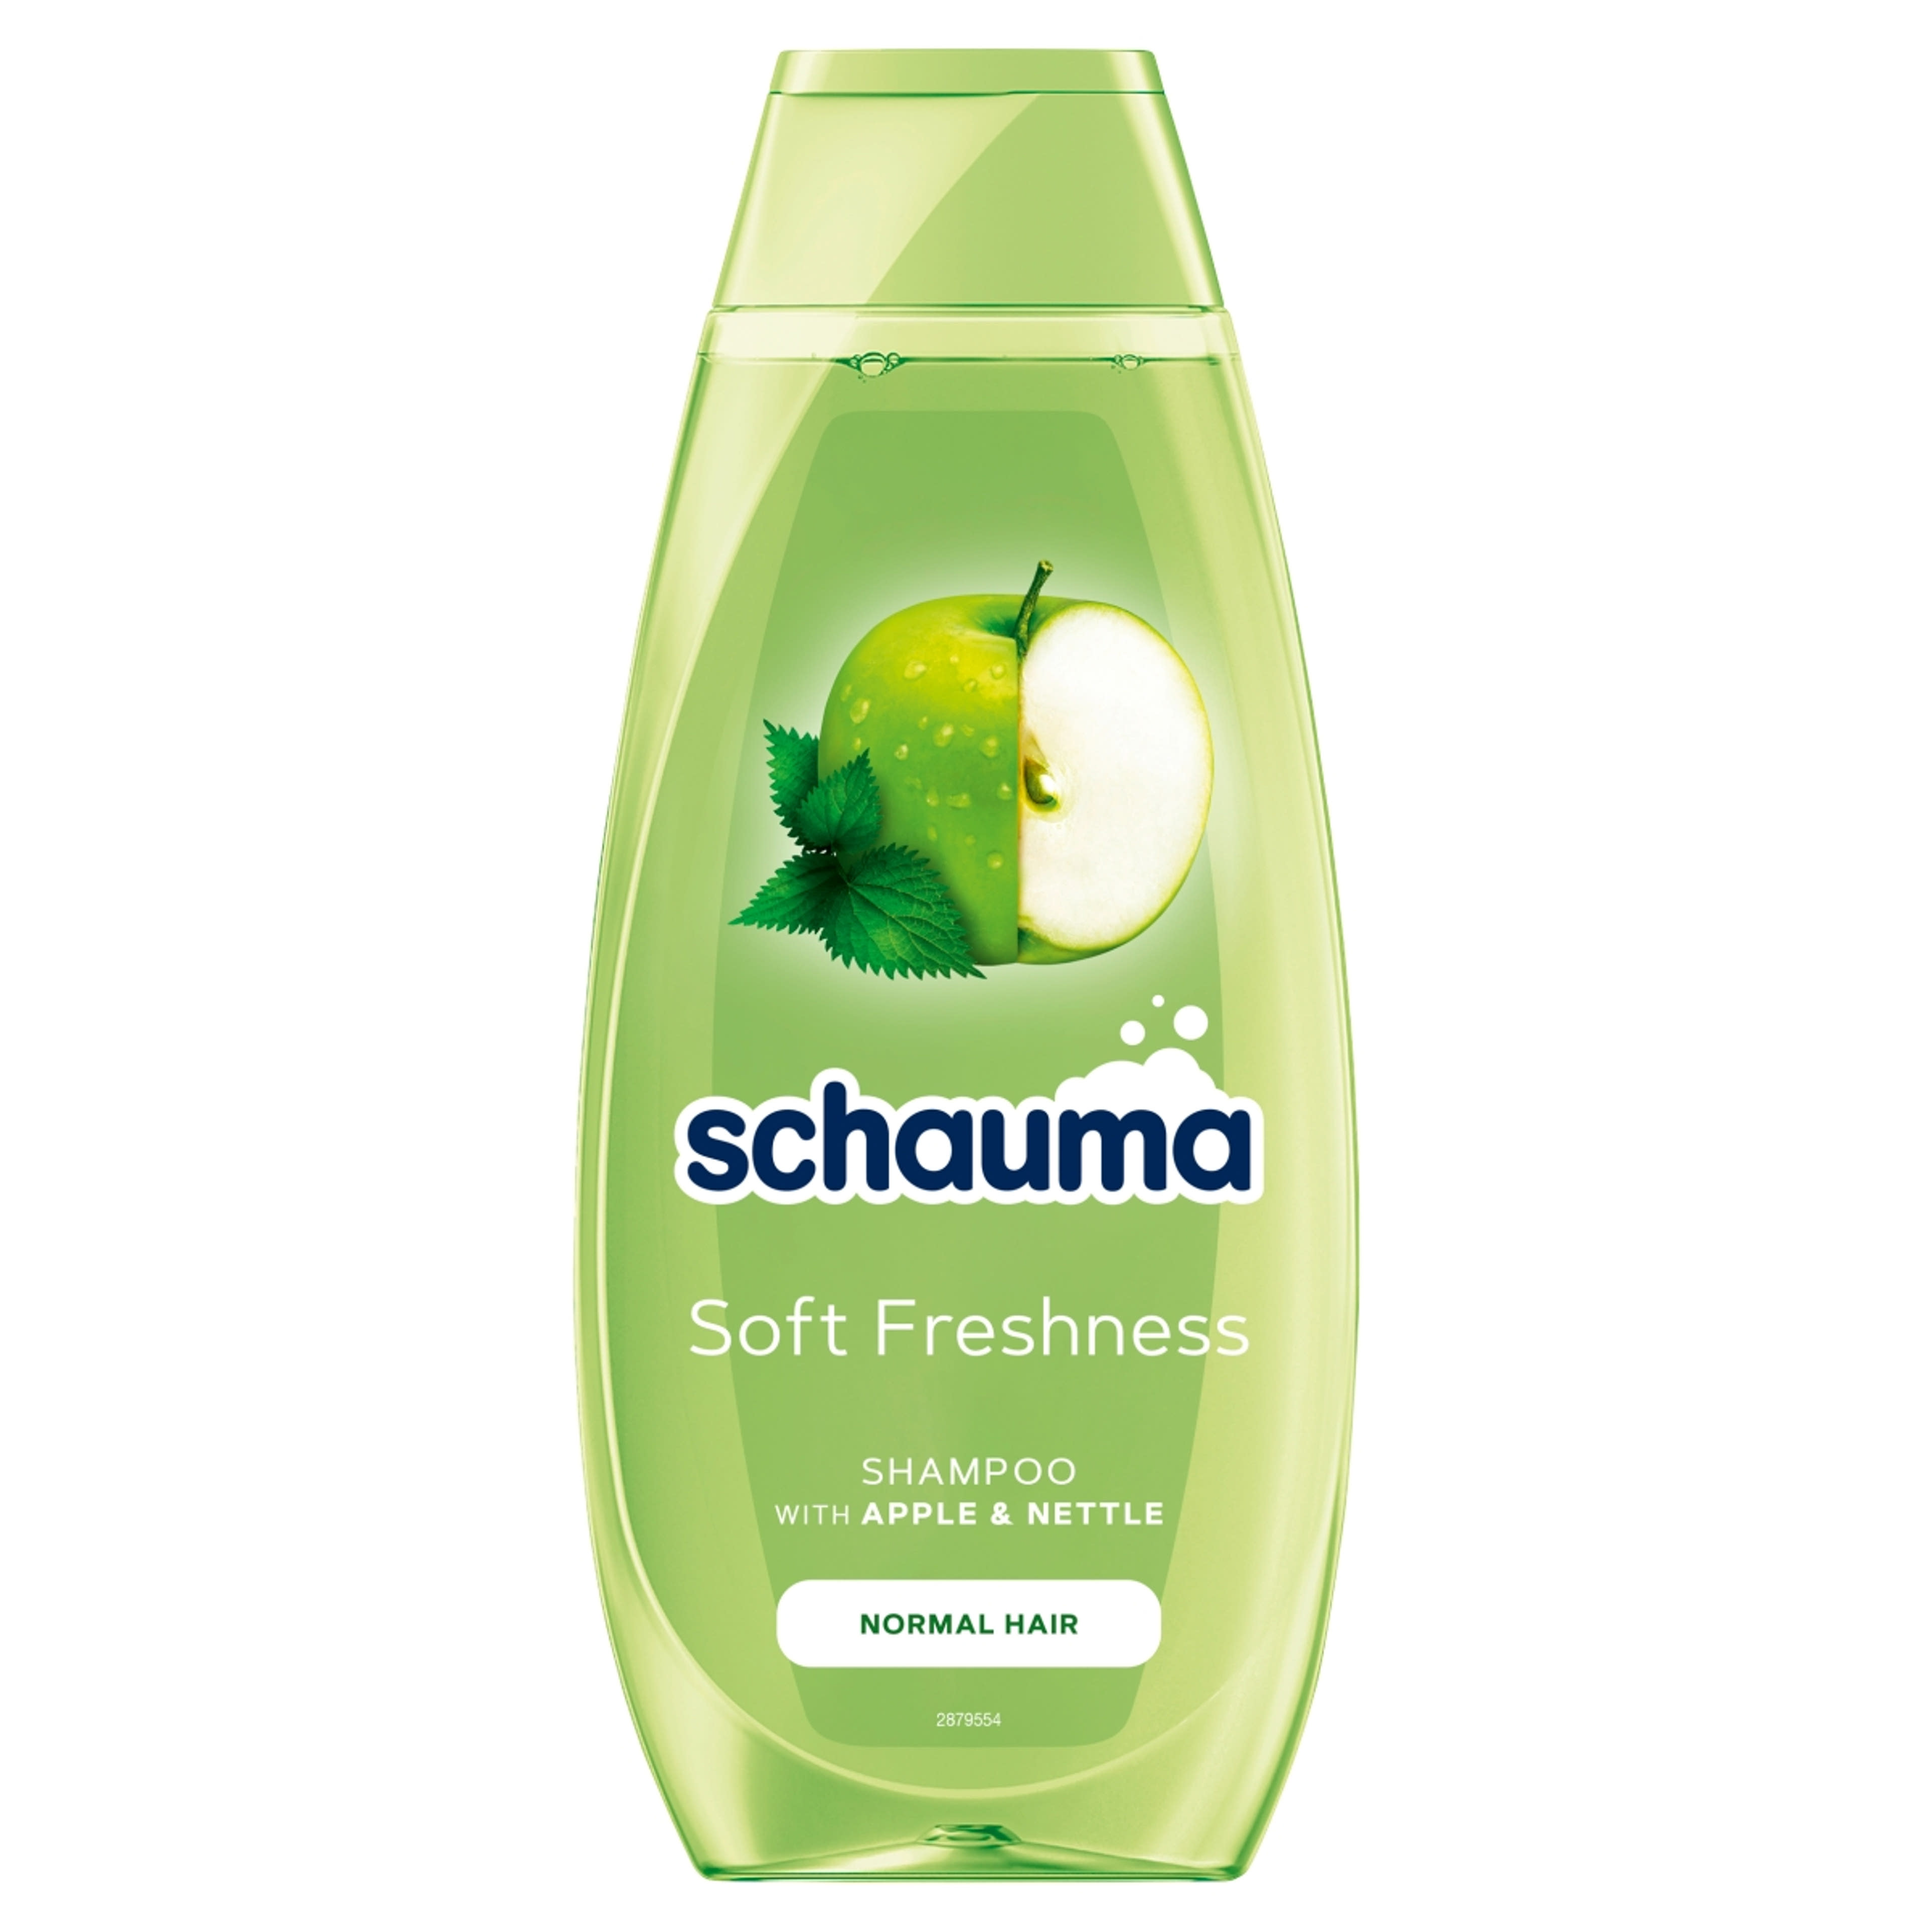 Schauma sampon Clean & Fresh zöld almával és csalánnal - 400 ml-1